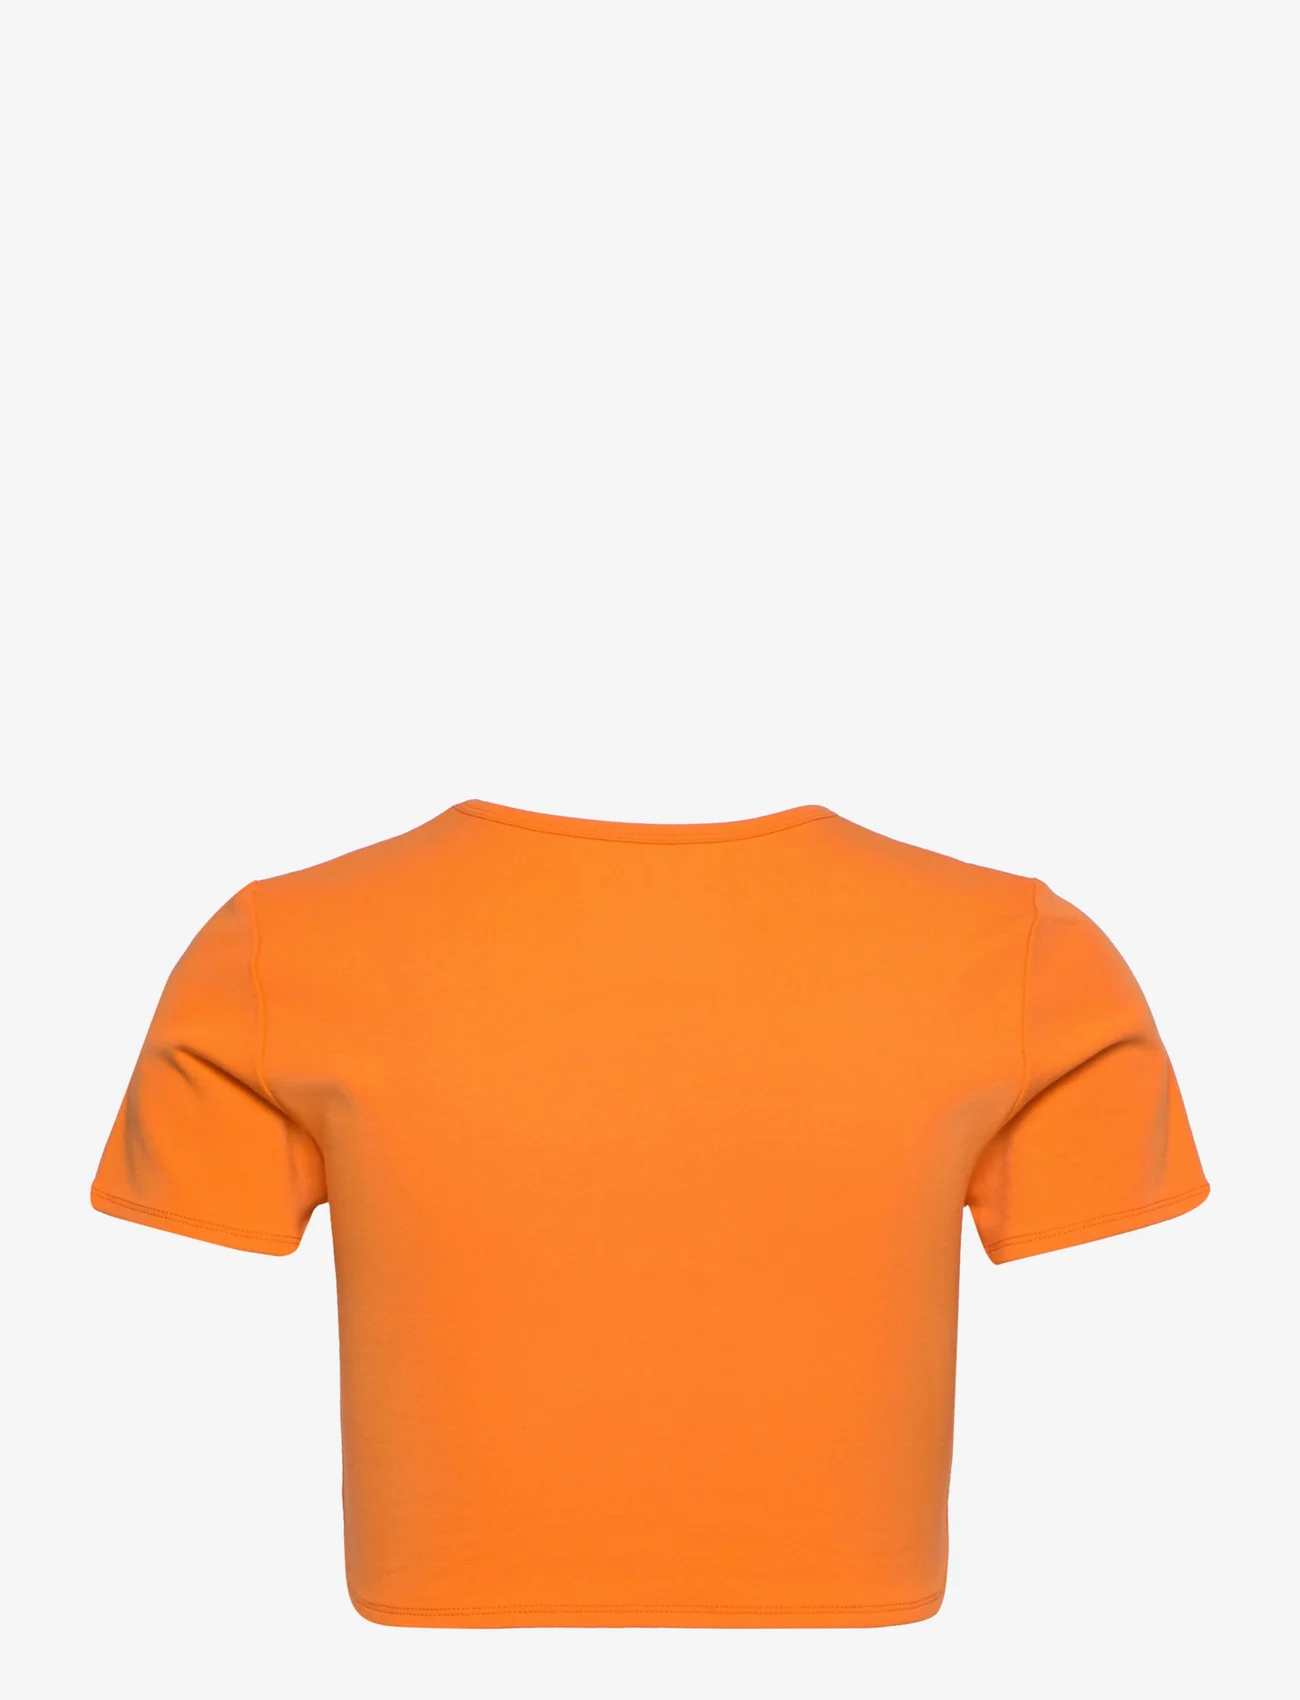 Barbara Kristoffersen by Rosemunde - T-shirt - crop tops - carrot curl - 1